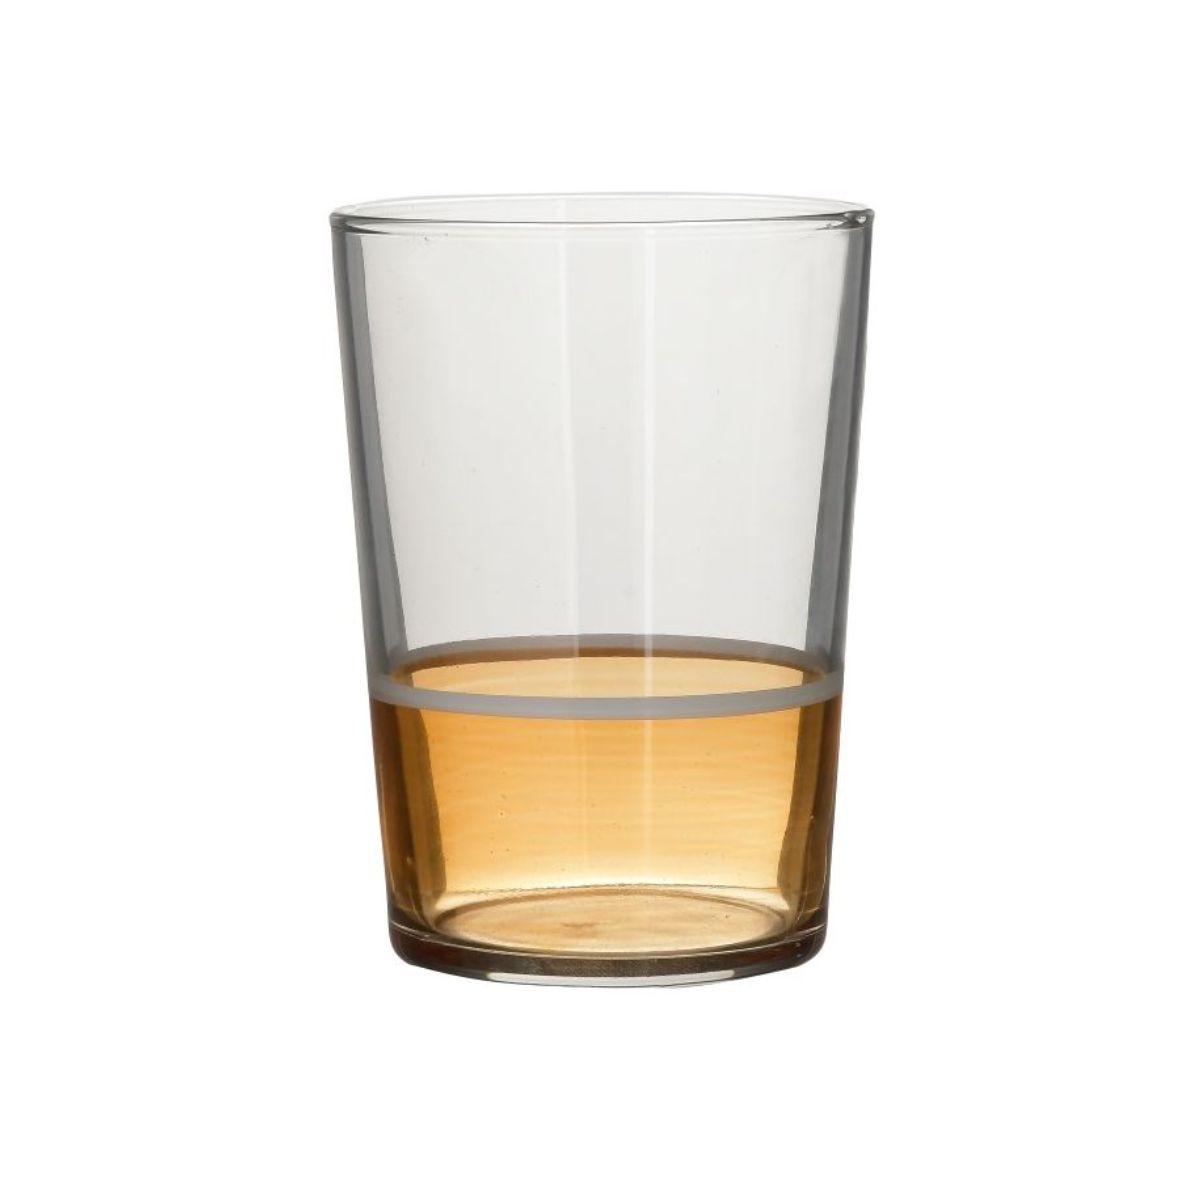 Bucatarie - Set 6 pahare de apa Inart,din sticla, transparent/aramiu, 0.51 l, hectarul.ro